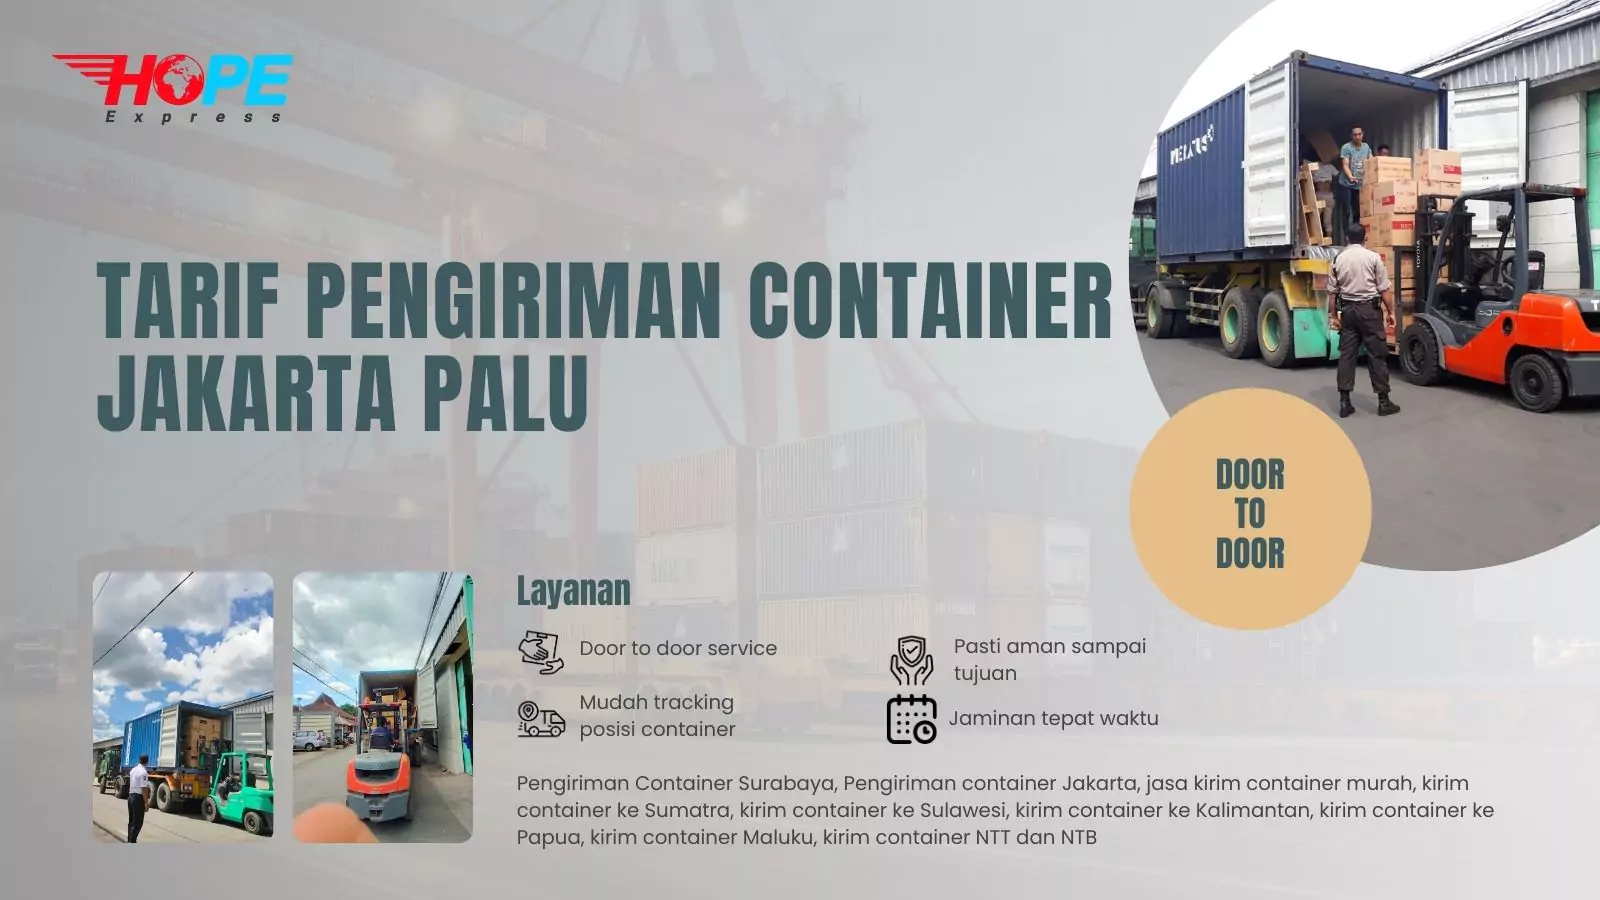 Tarif Pengiriman Container Jakarta Palu